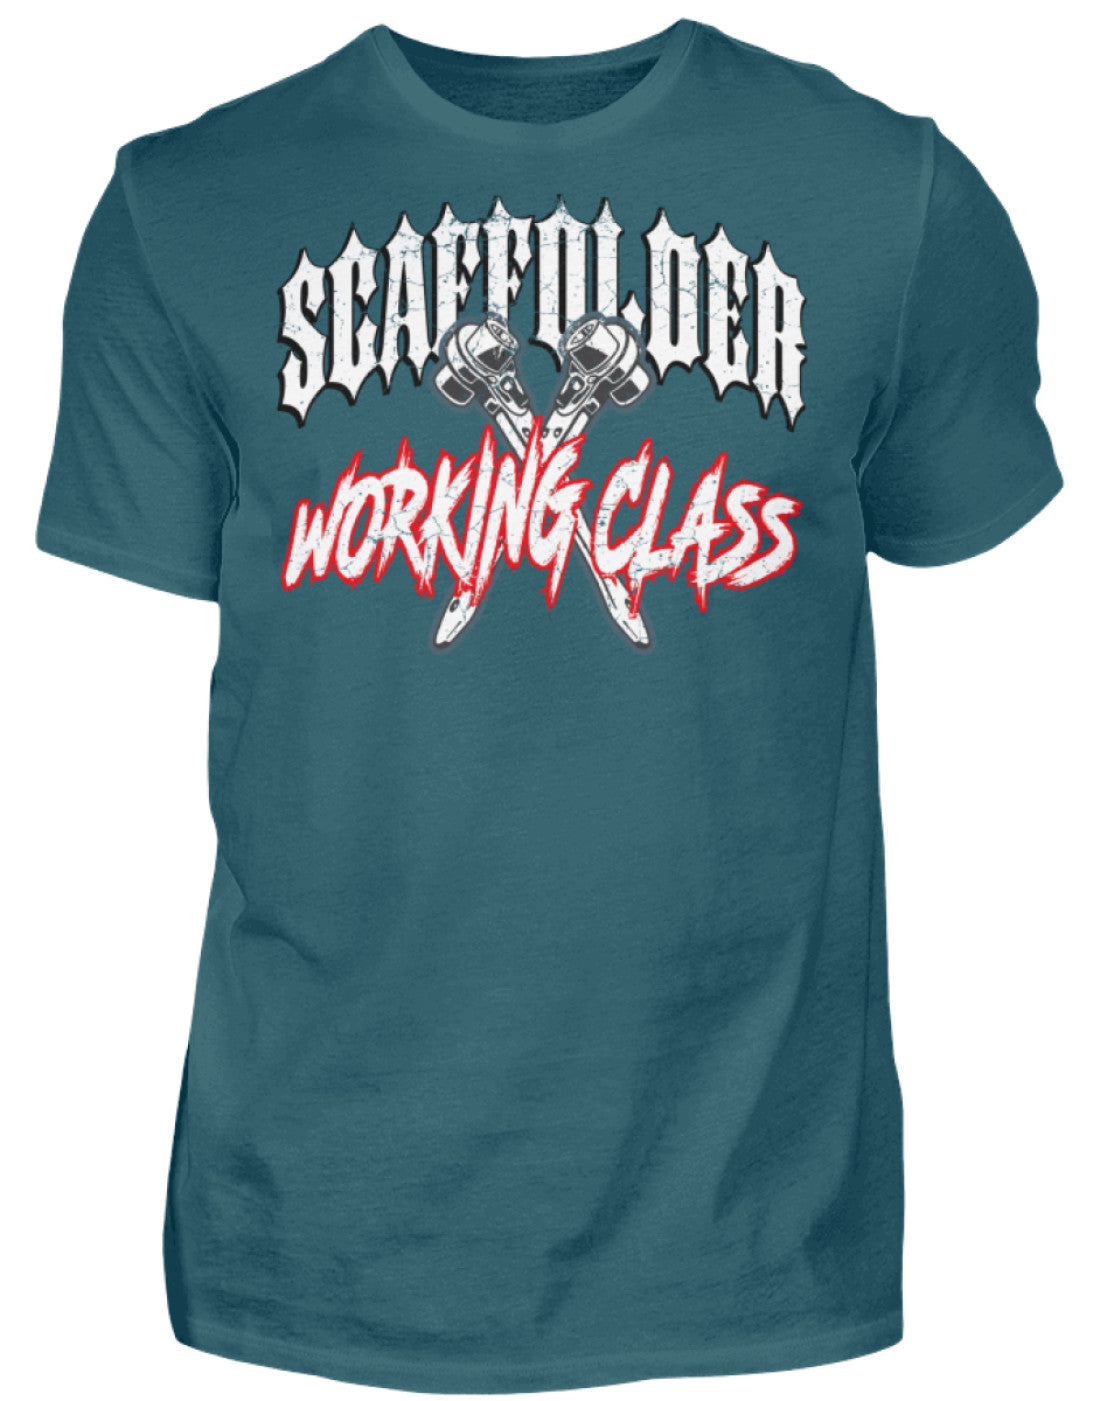 Scaffolder Working Class €22.95 Gerüstbauer - Shop >>